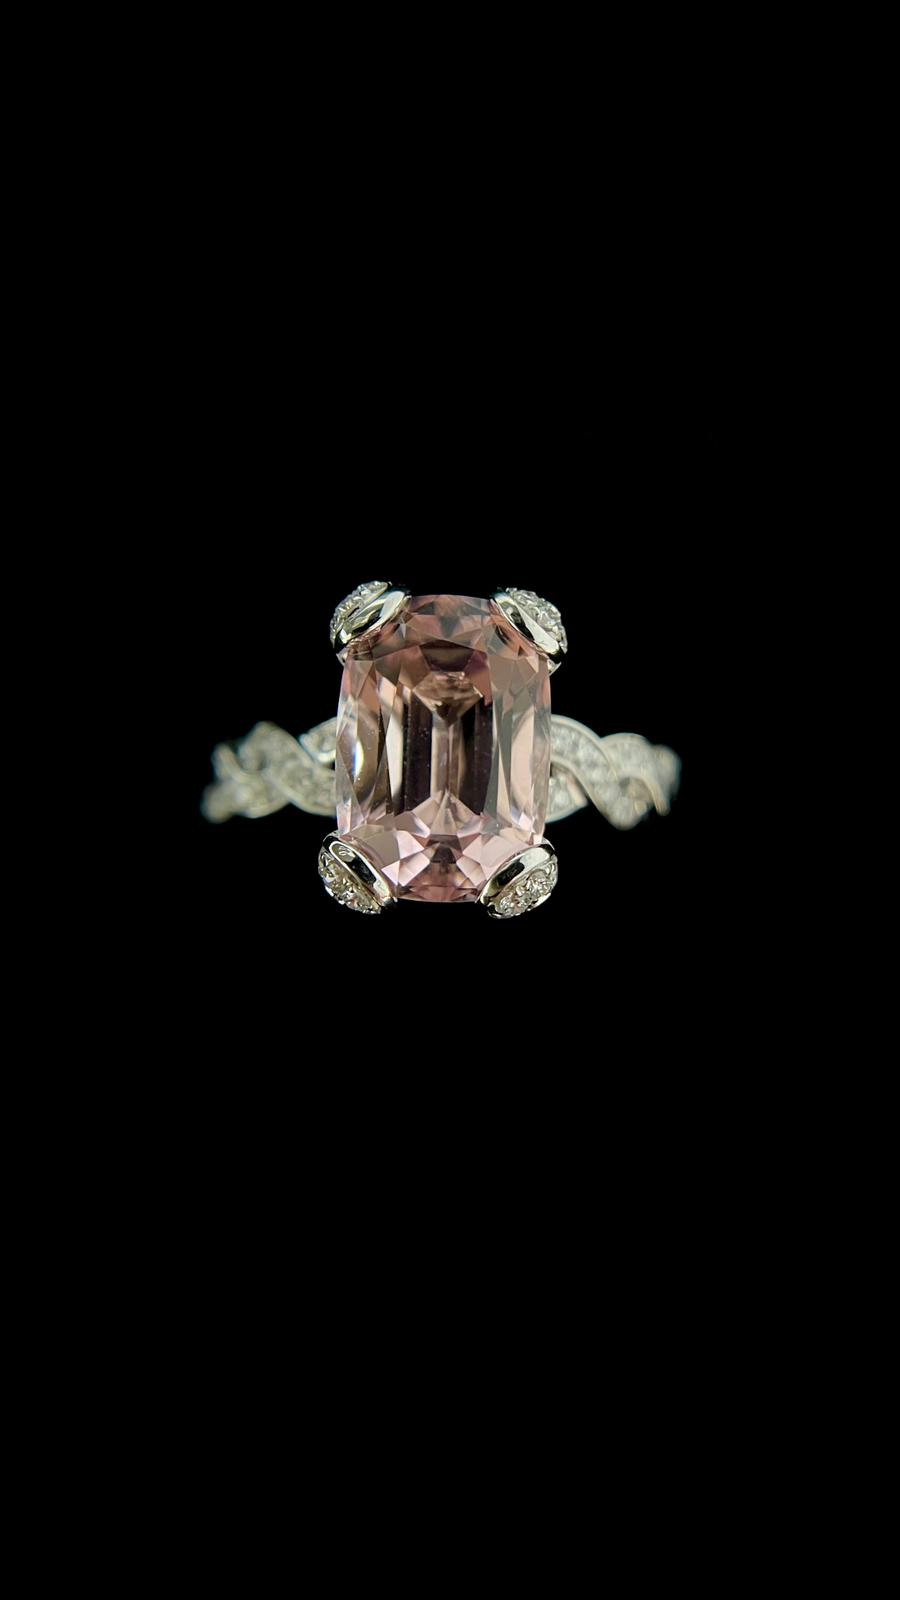 Morganite Diamond Ring